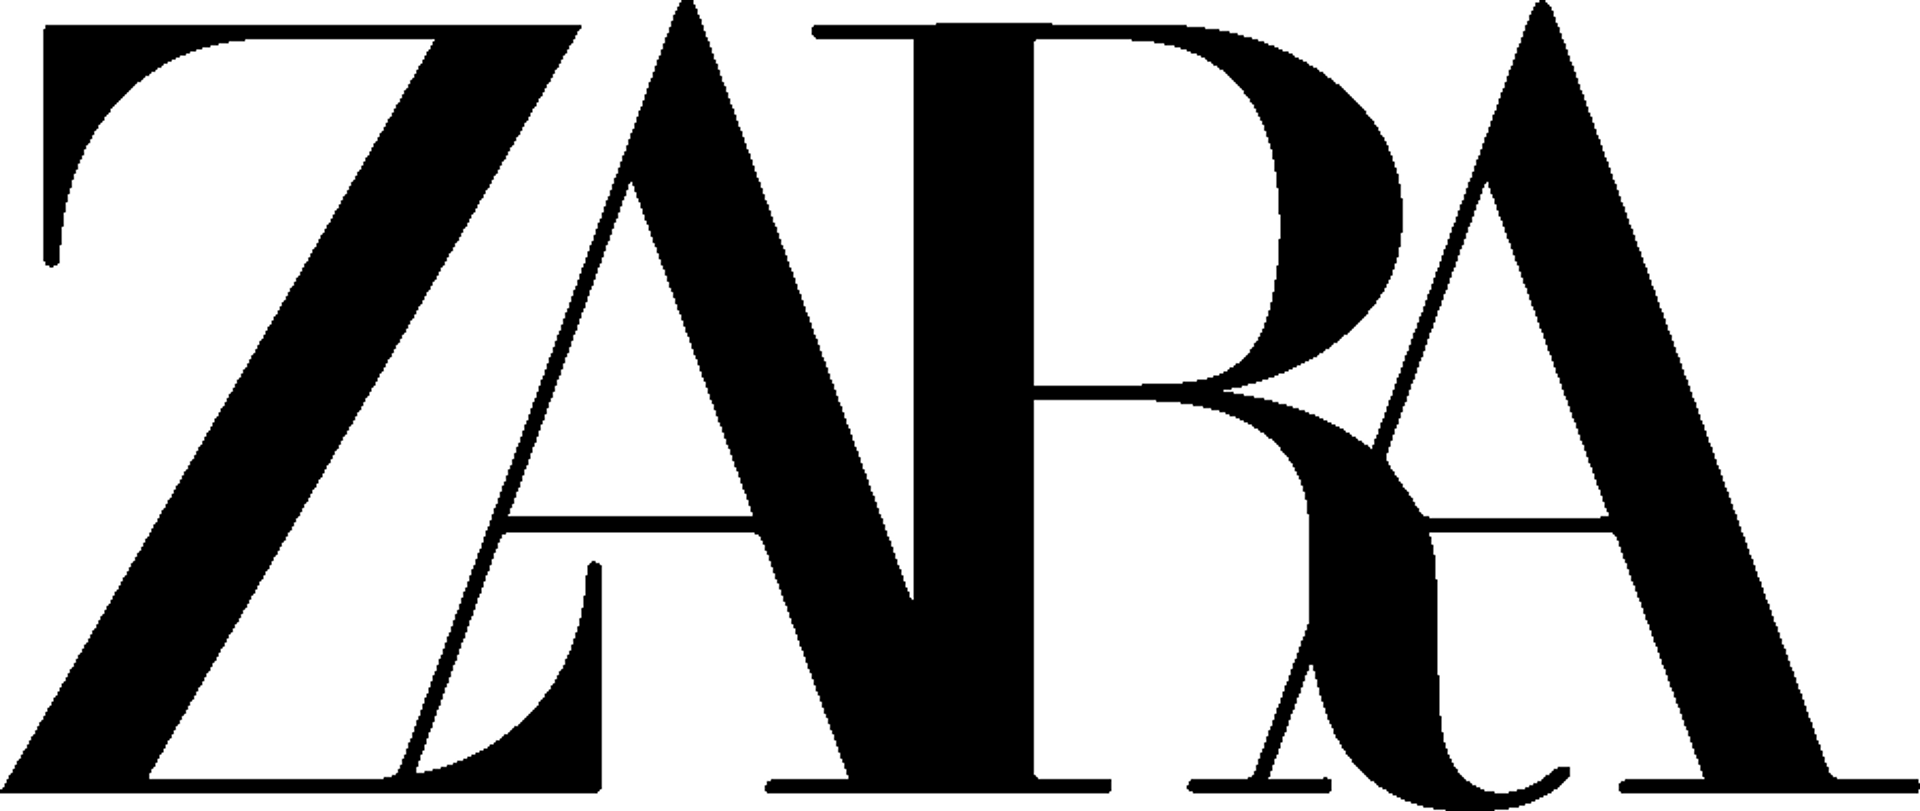 ZARA logo of current catalogue